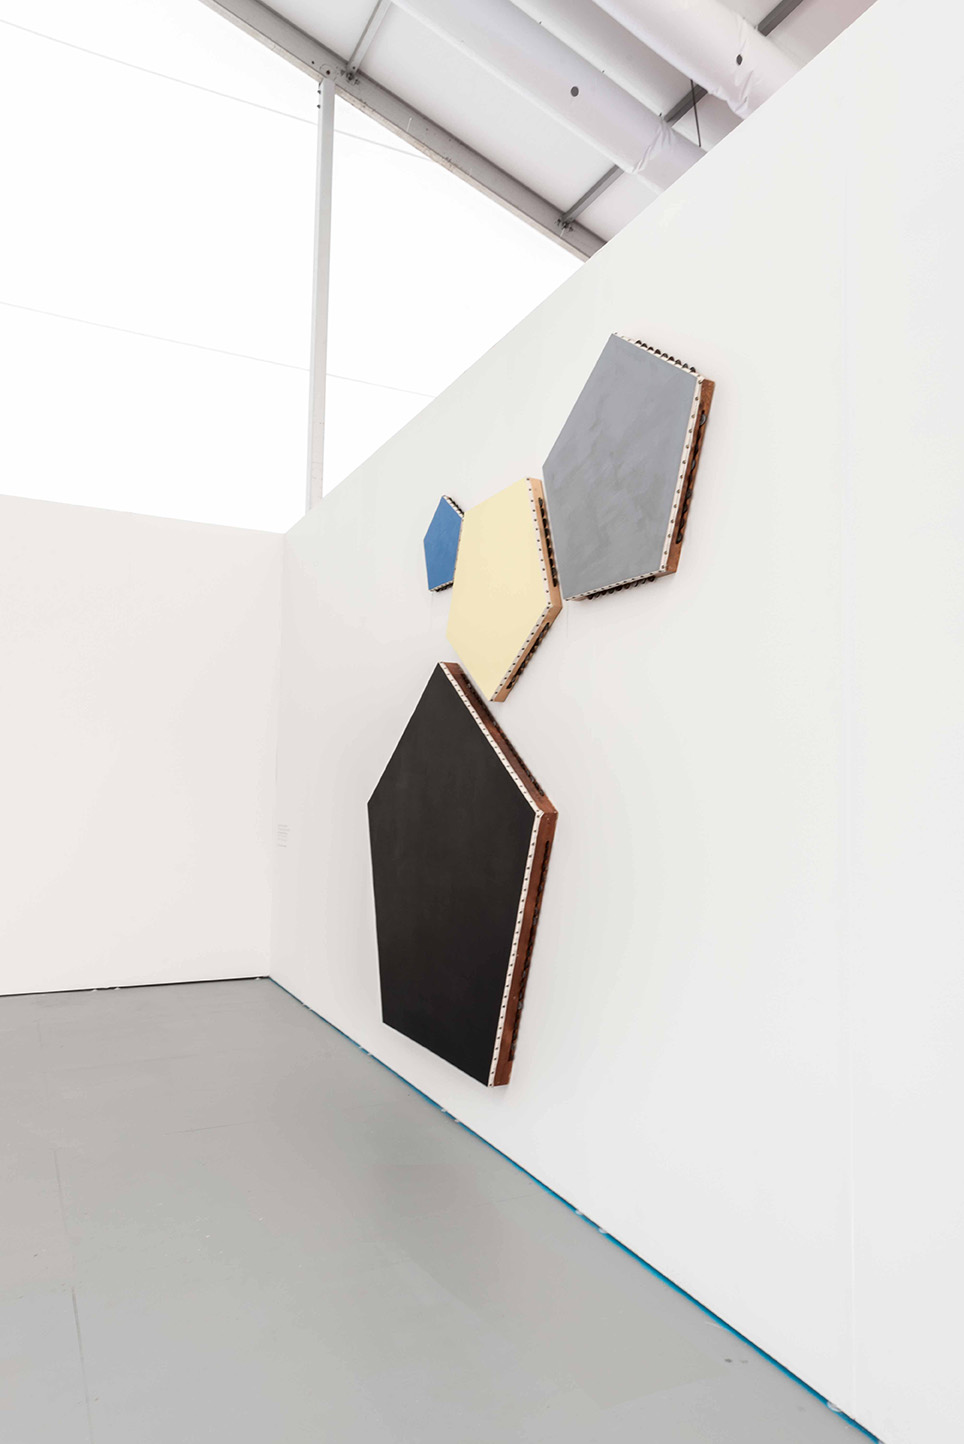 Galerie Laurent Godin - Miami 2015-8-lr.jpg